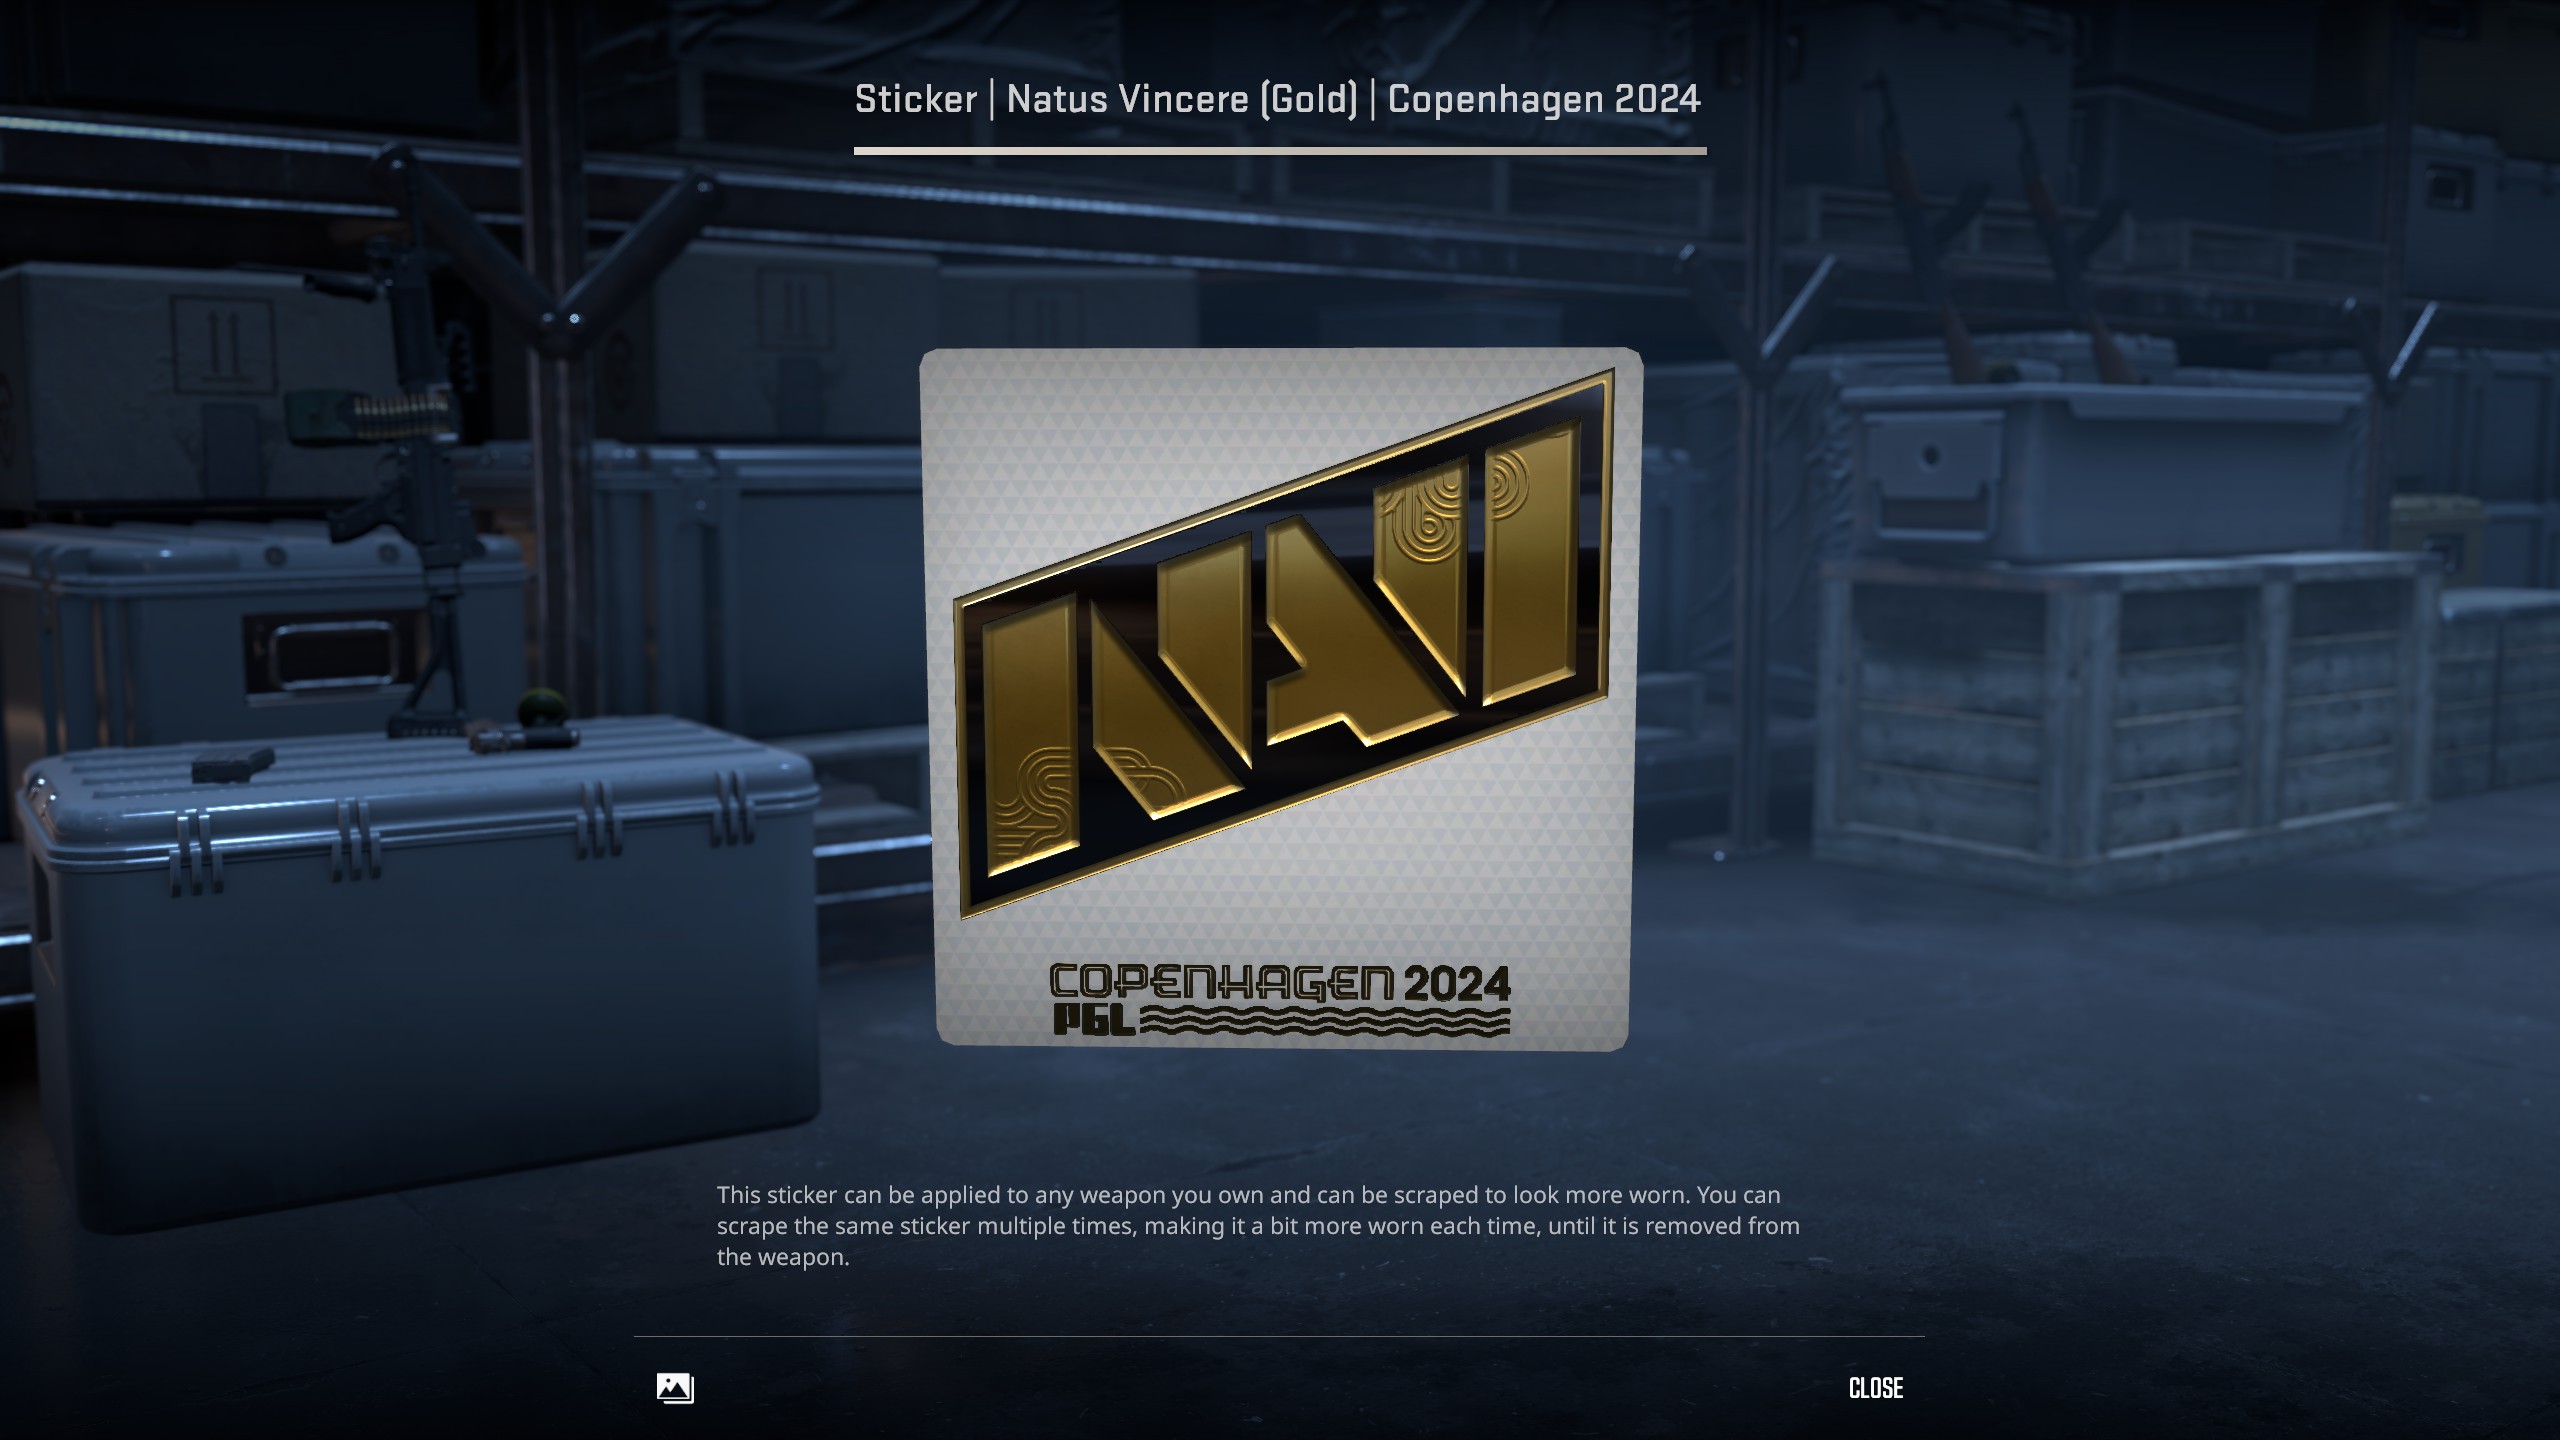 Natus Vincere Gold Sticker PGL Major Copenhagen 2024 - How to inspect unreleased Stickers